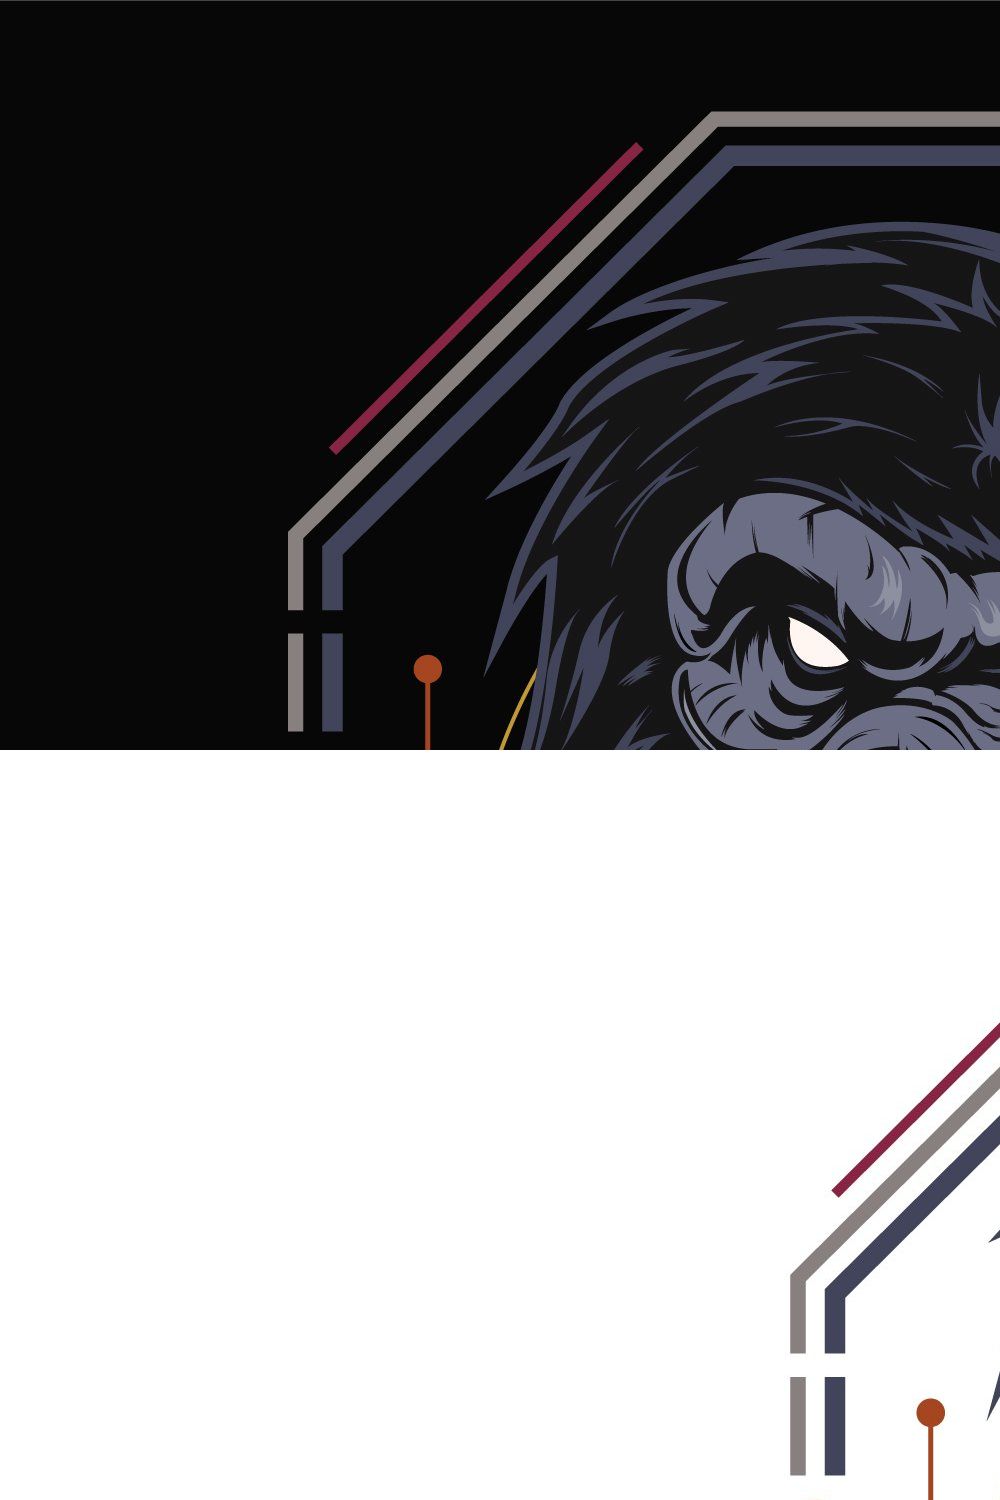 Mad gorilla emblem pinterest preview image.